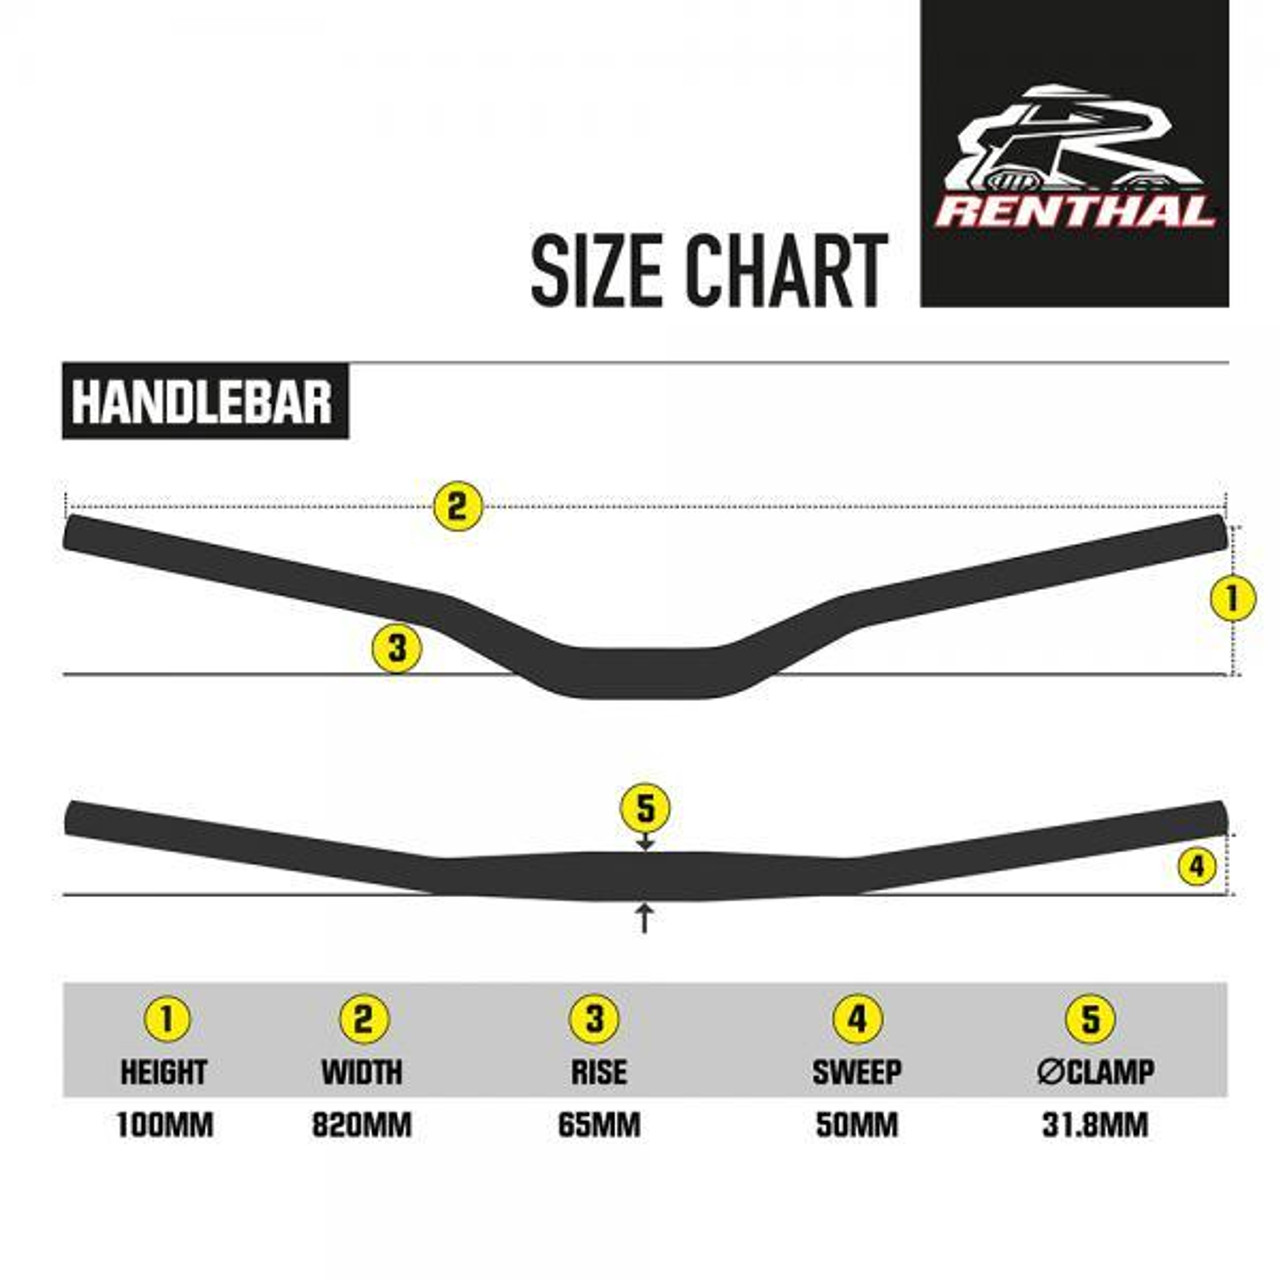 Renthal Handlebars Size Chart